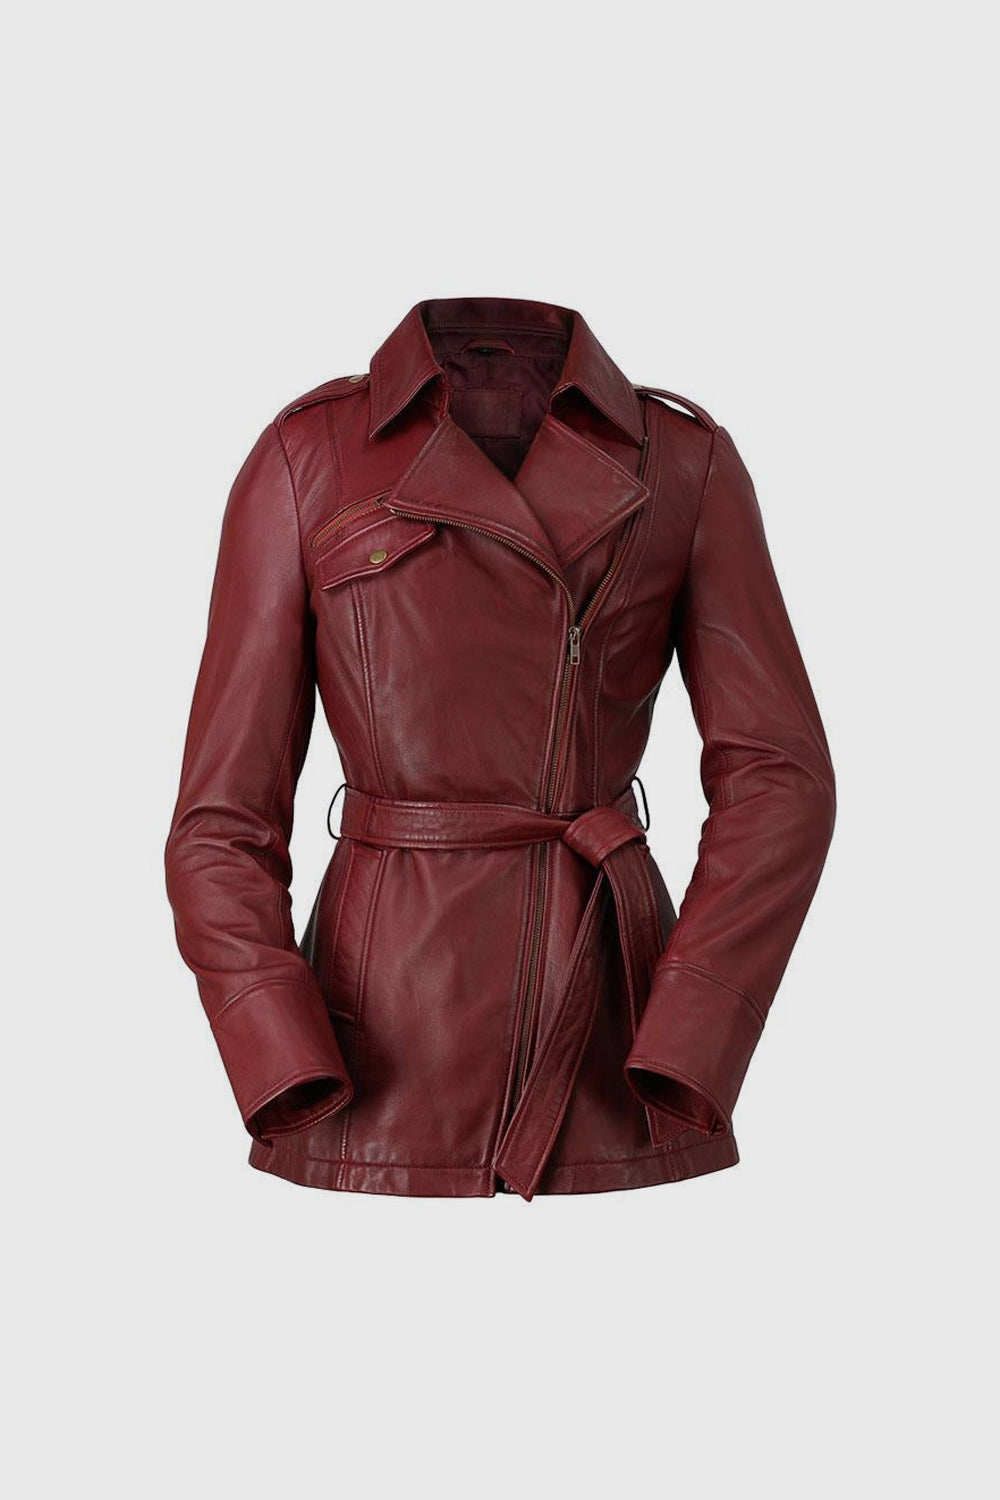 Traci Womens Leather Jacket Oxblood